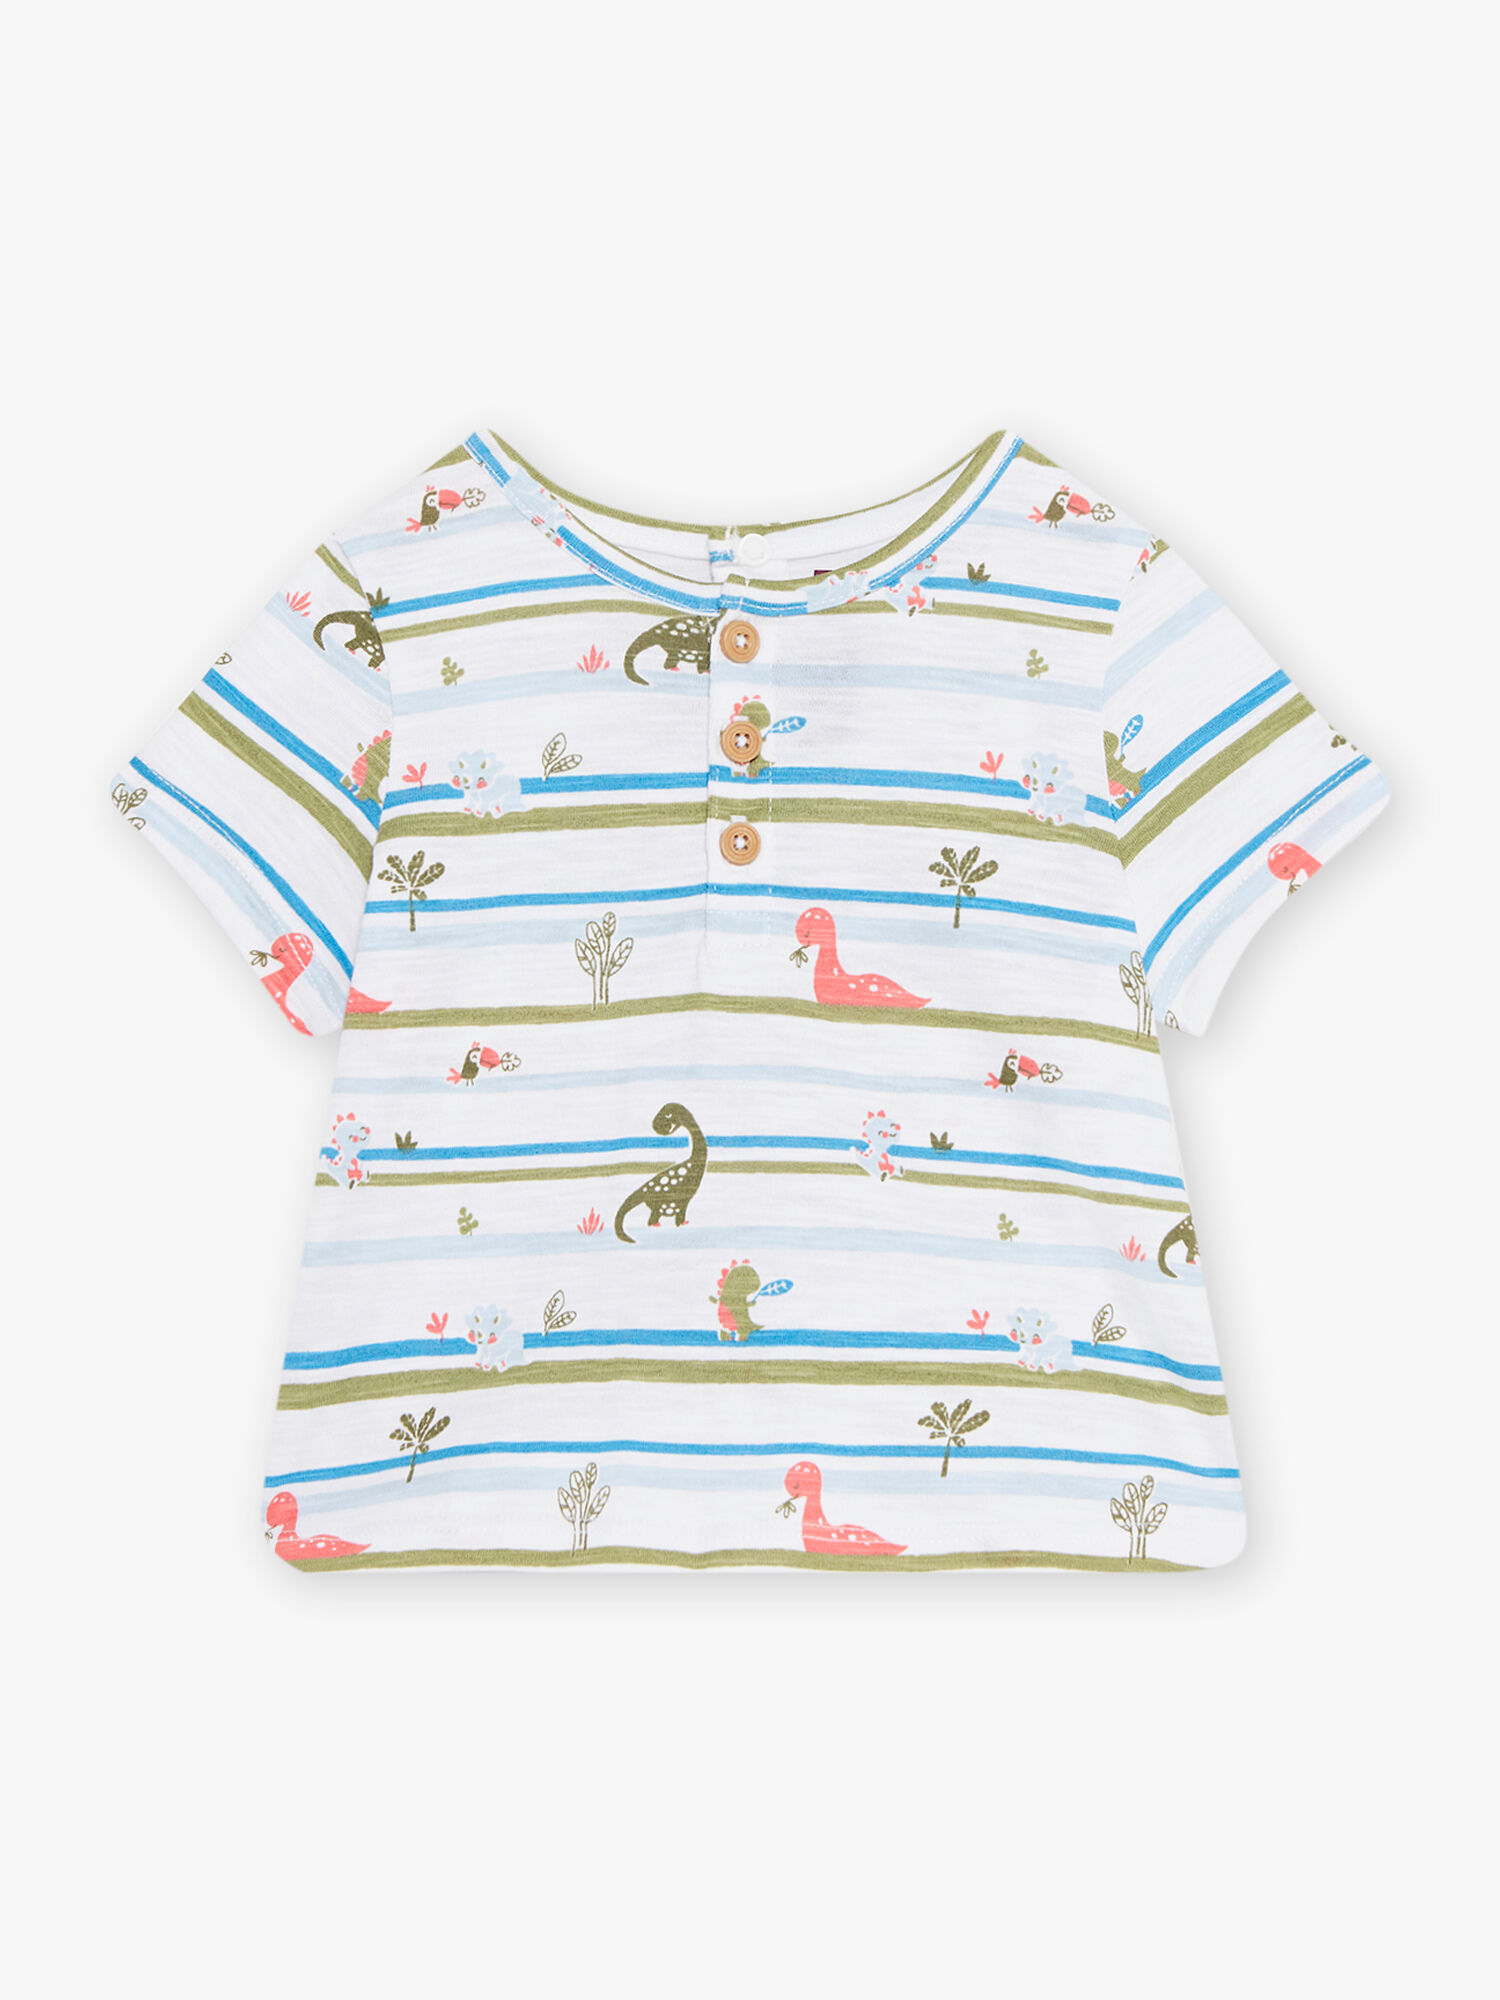 My Sky Unisex Baby Boys Girls T-Shirt Stripe Short Sleeve Tee